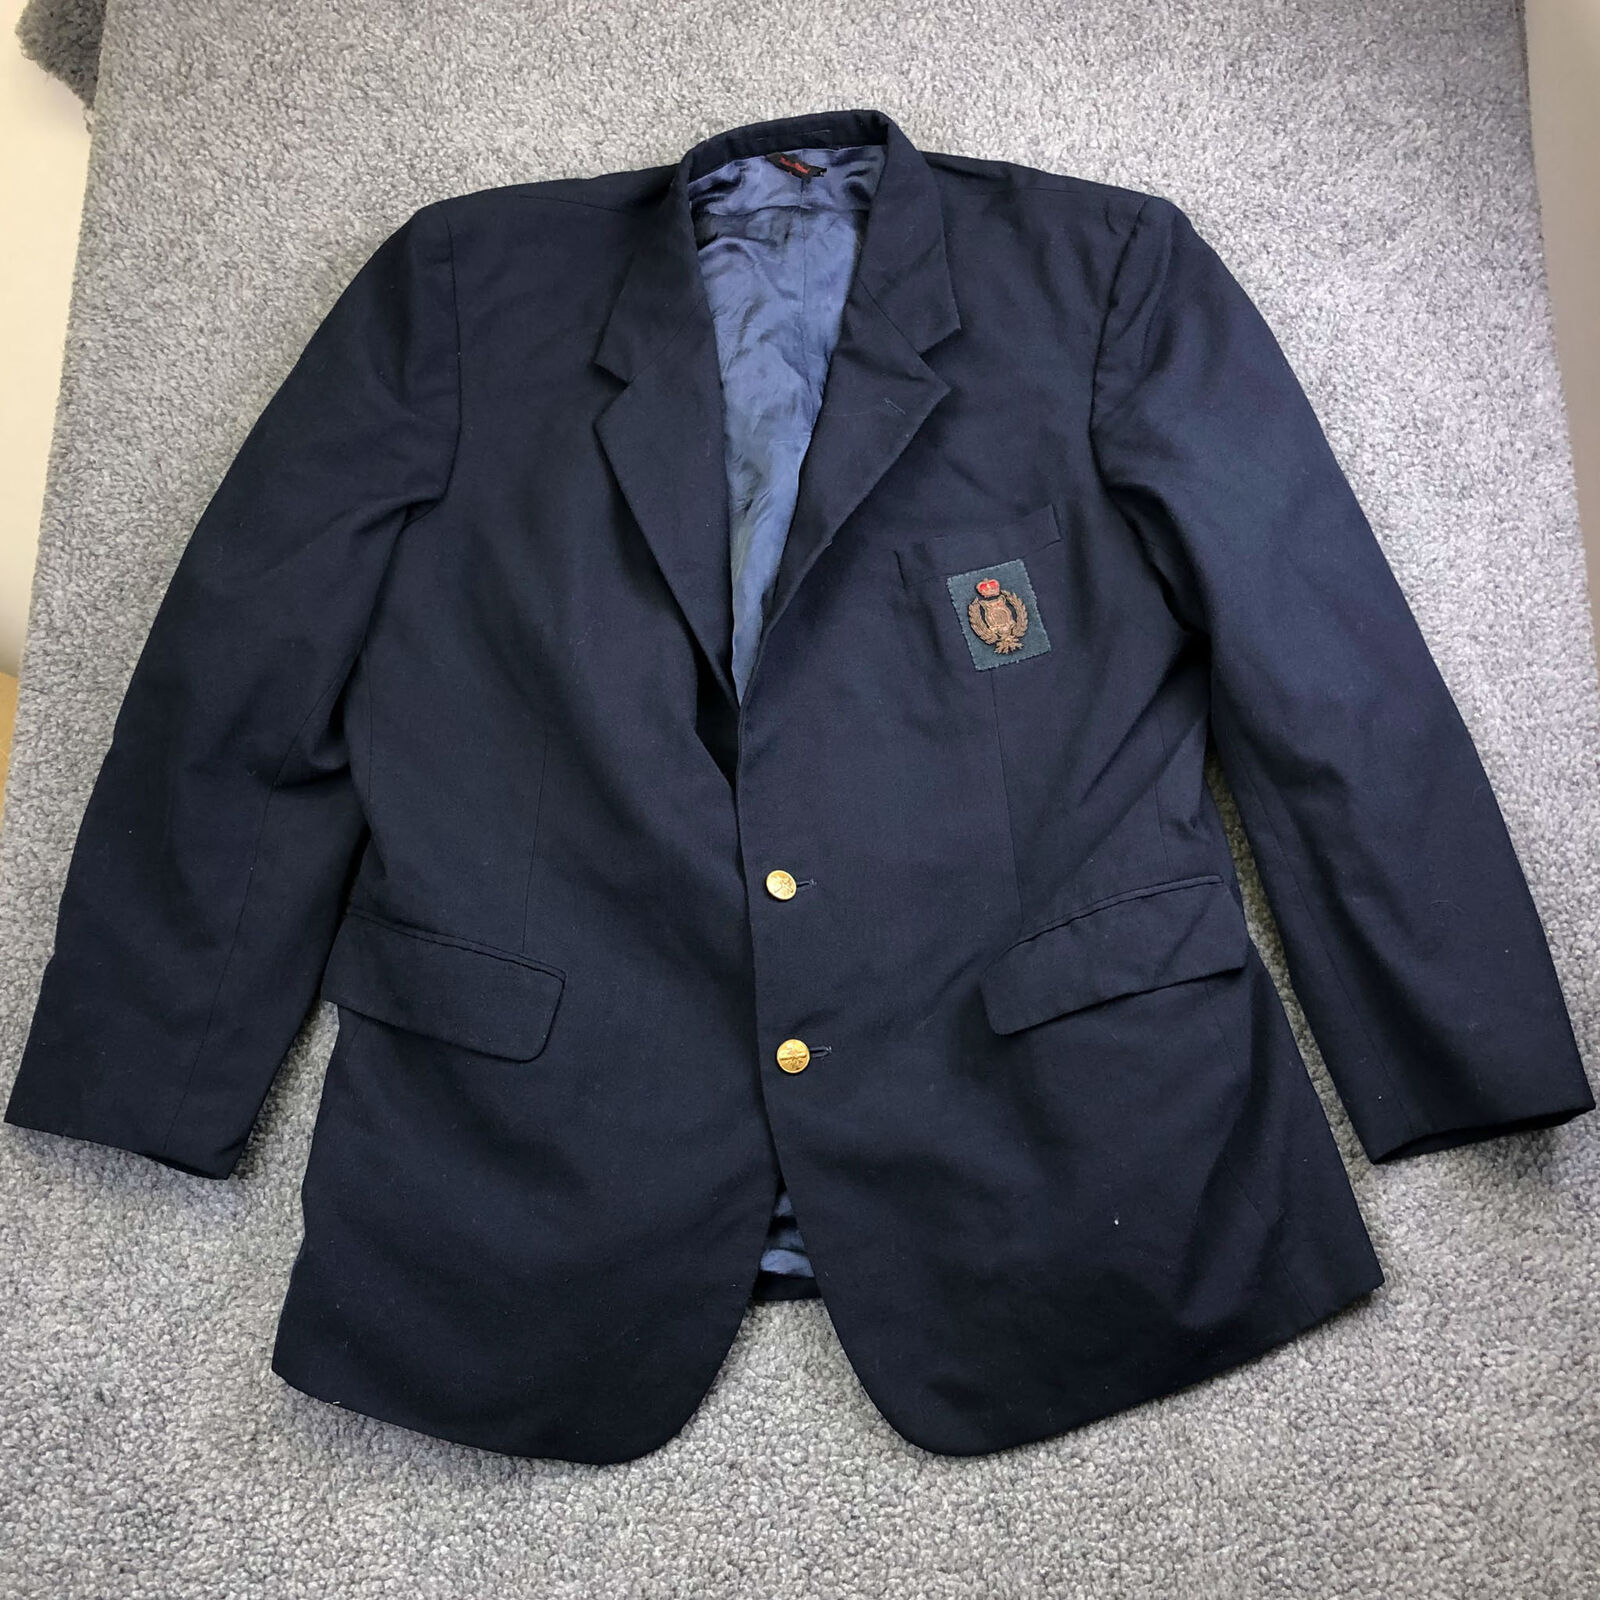 Charing Cross Jacket 48L United Kingdom Military Bullion Crest Buttons Vintage